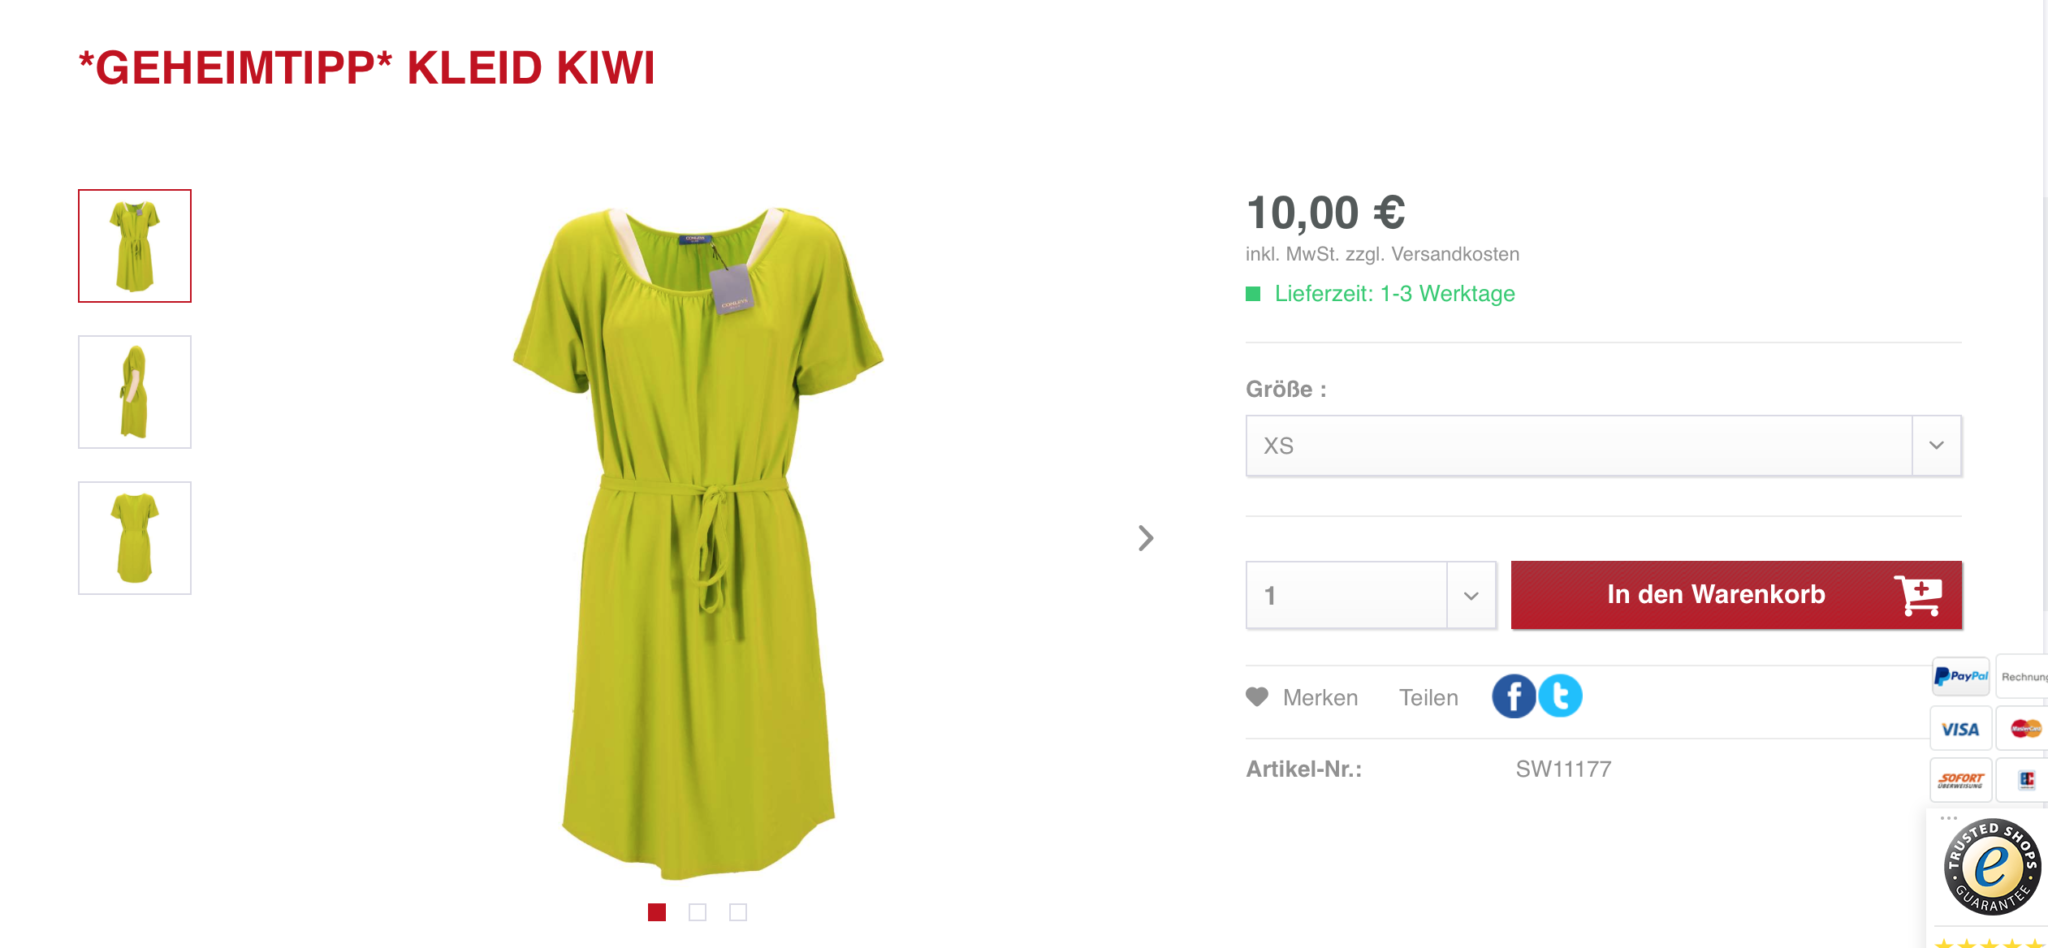 Hochwertige Kleidung bei alles10euro.de - Tanja's Everyday Blog